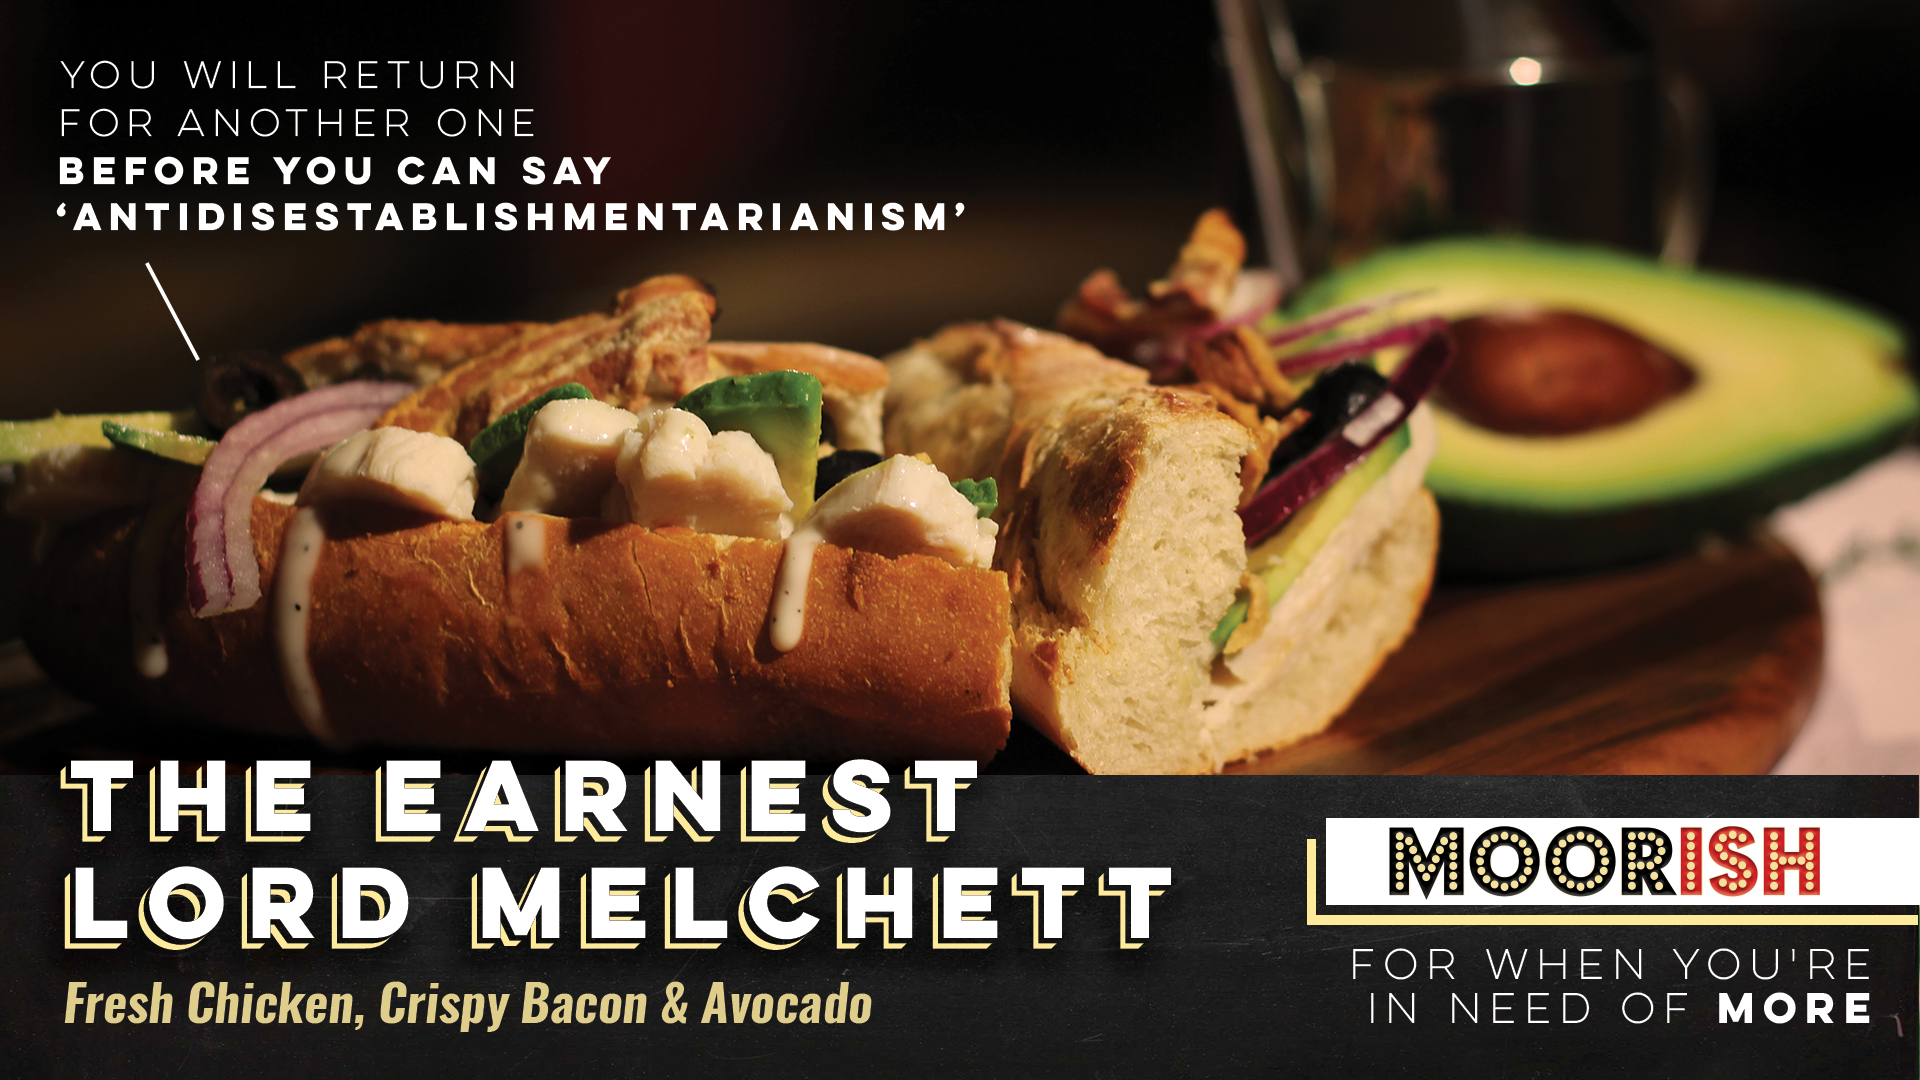 Moorish Sandwich Menu Ad 1.png